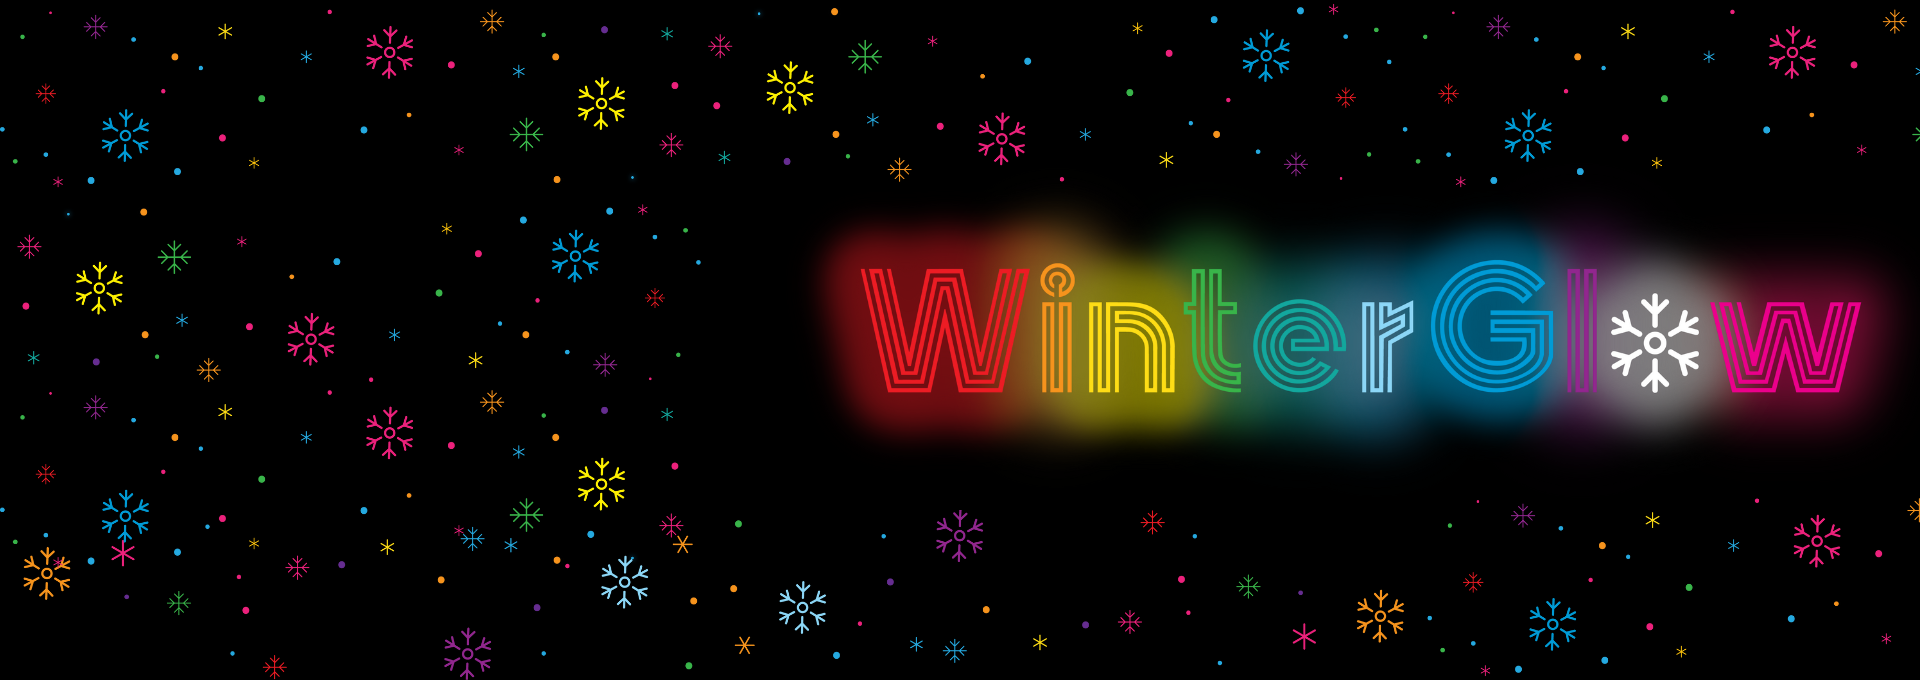 WinterGlow wordmark with neon snowflake background